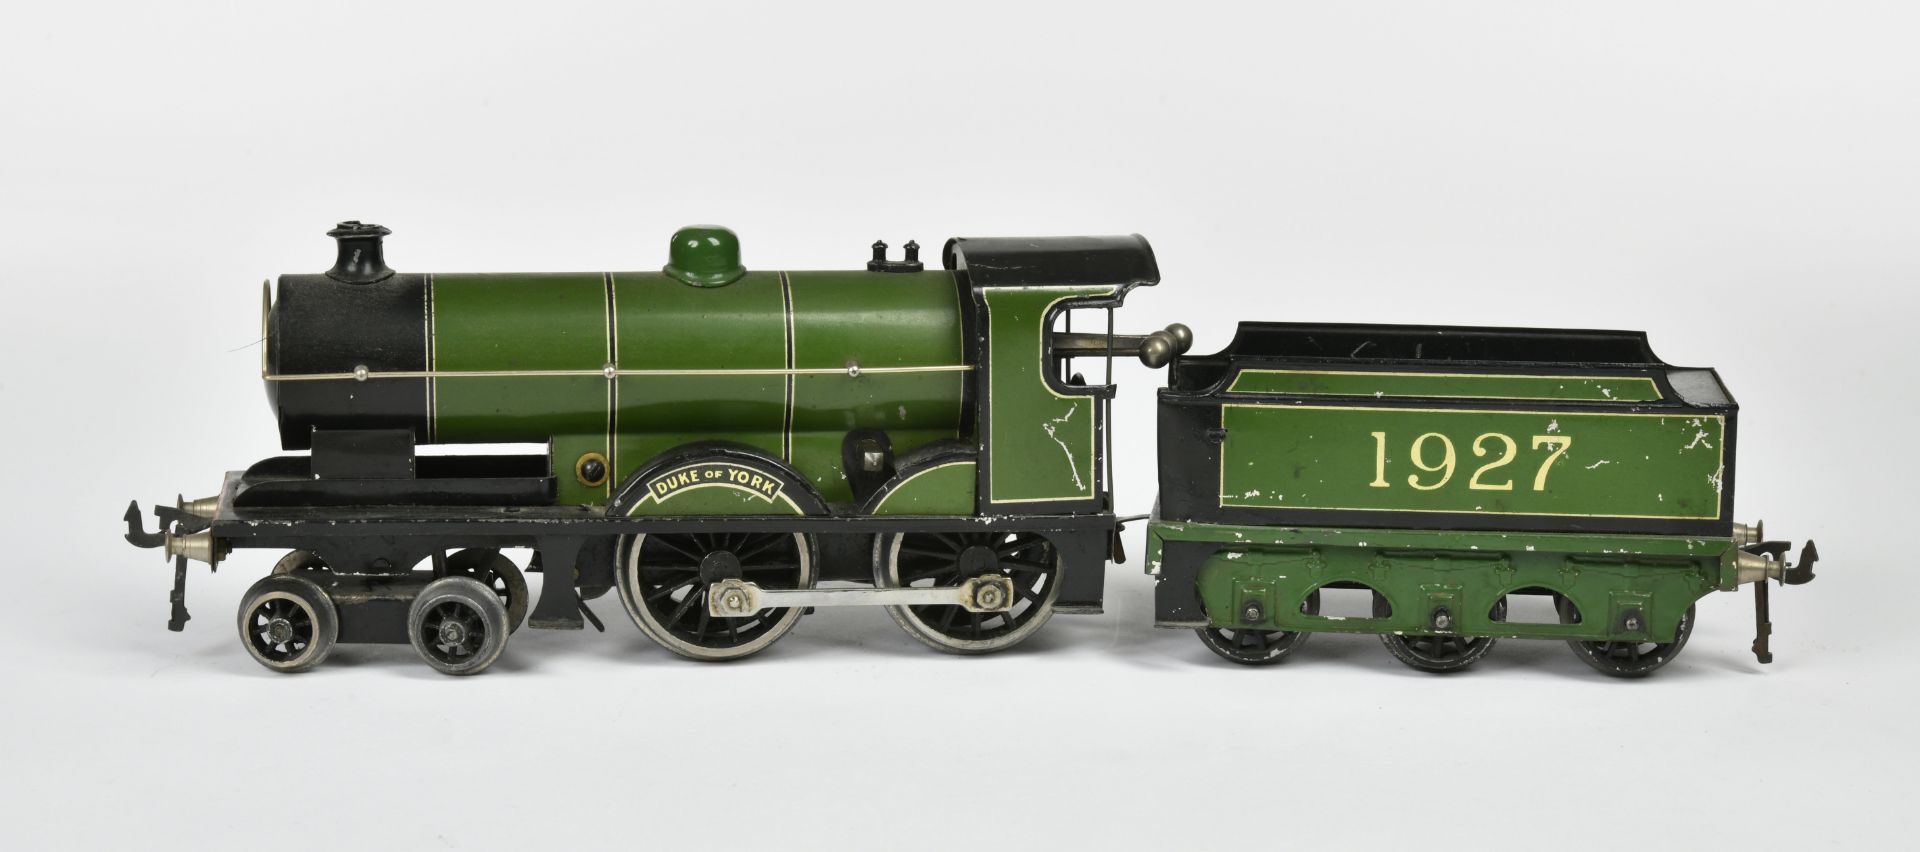 Bassett-Lowke, loco 1927 "Duke of York", England, gauge 0, tin, cw ok, paint d., C 2